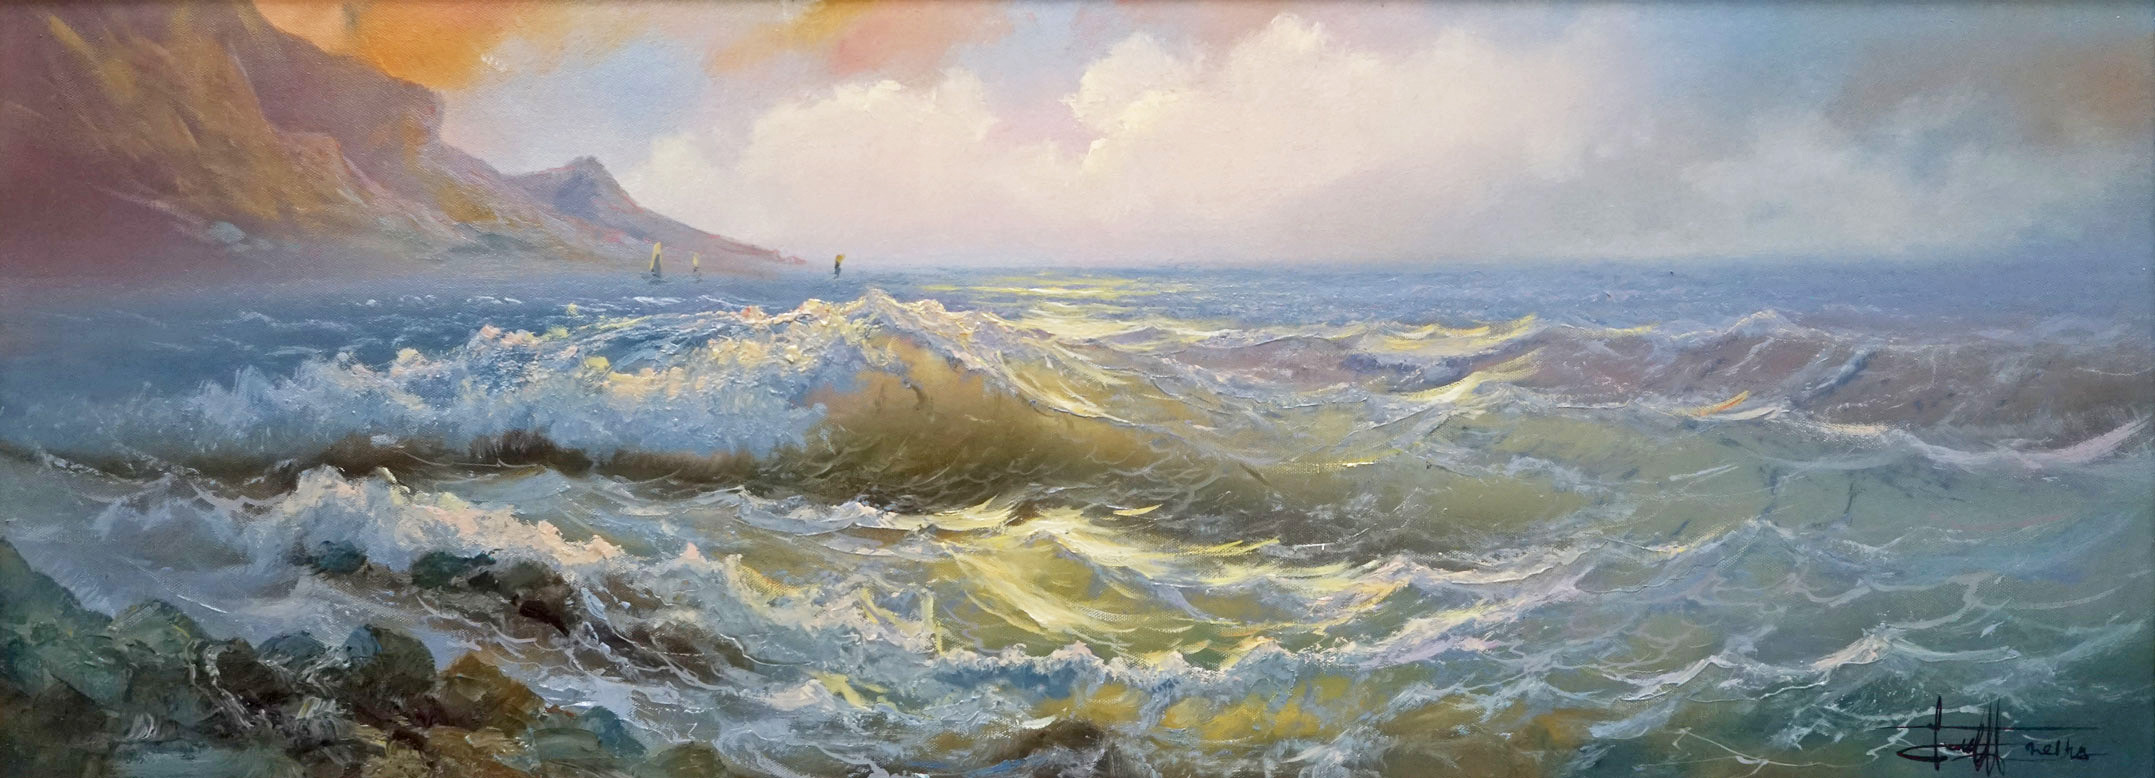 Seashore, Dmitry Balakhonov, Buy the painting Oil